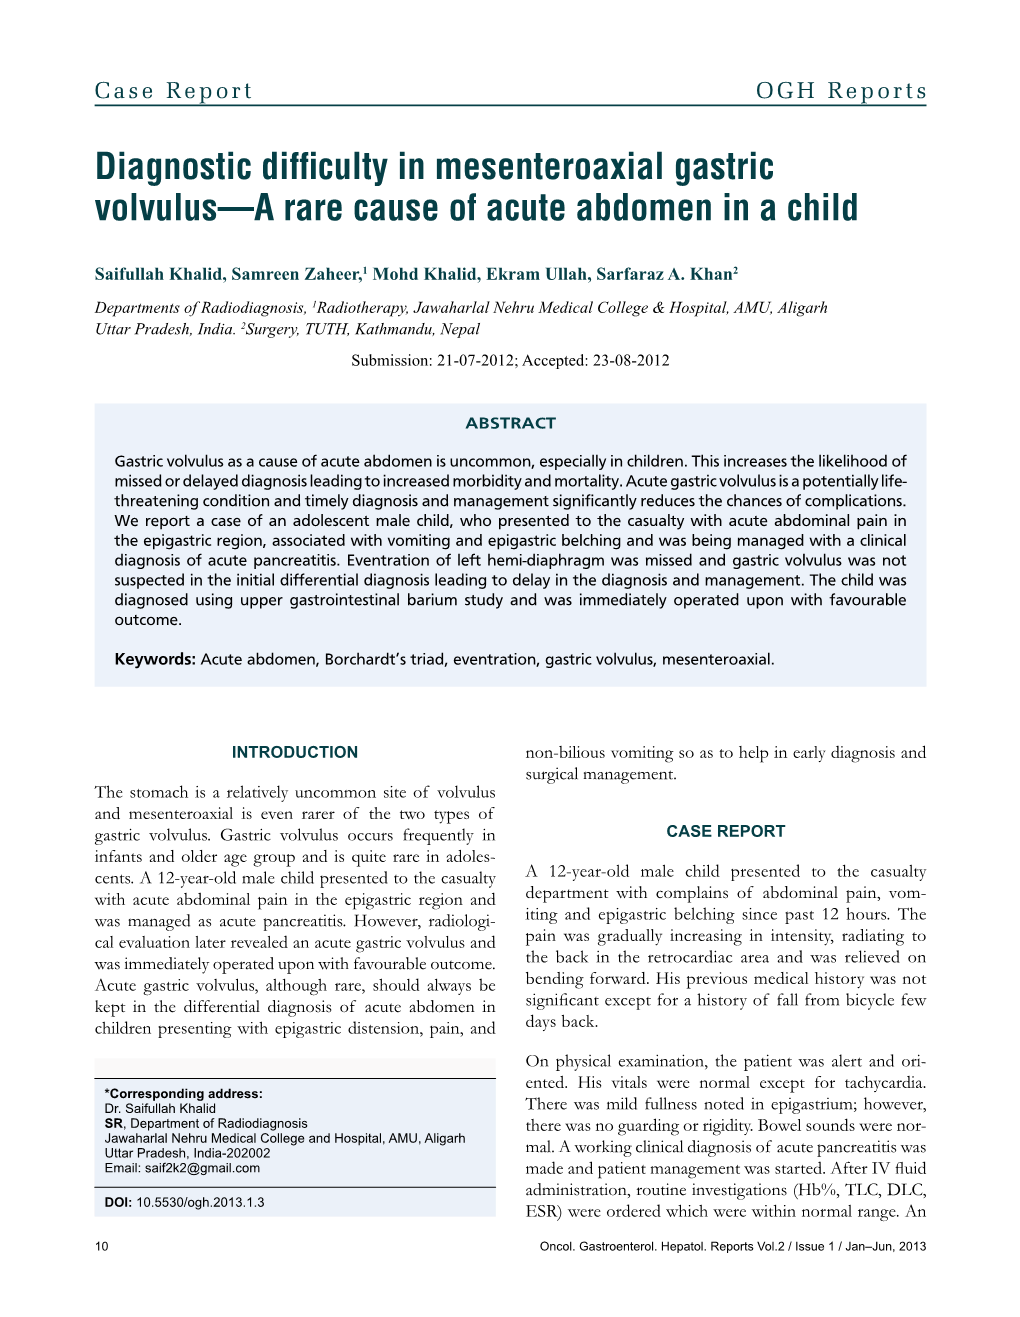 Diagnostic Difficulty in Mesenteroaxial Gastric Volvulus—A Rare Cause of Acute Abdomen in a Child